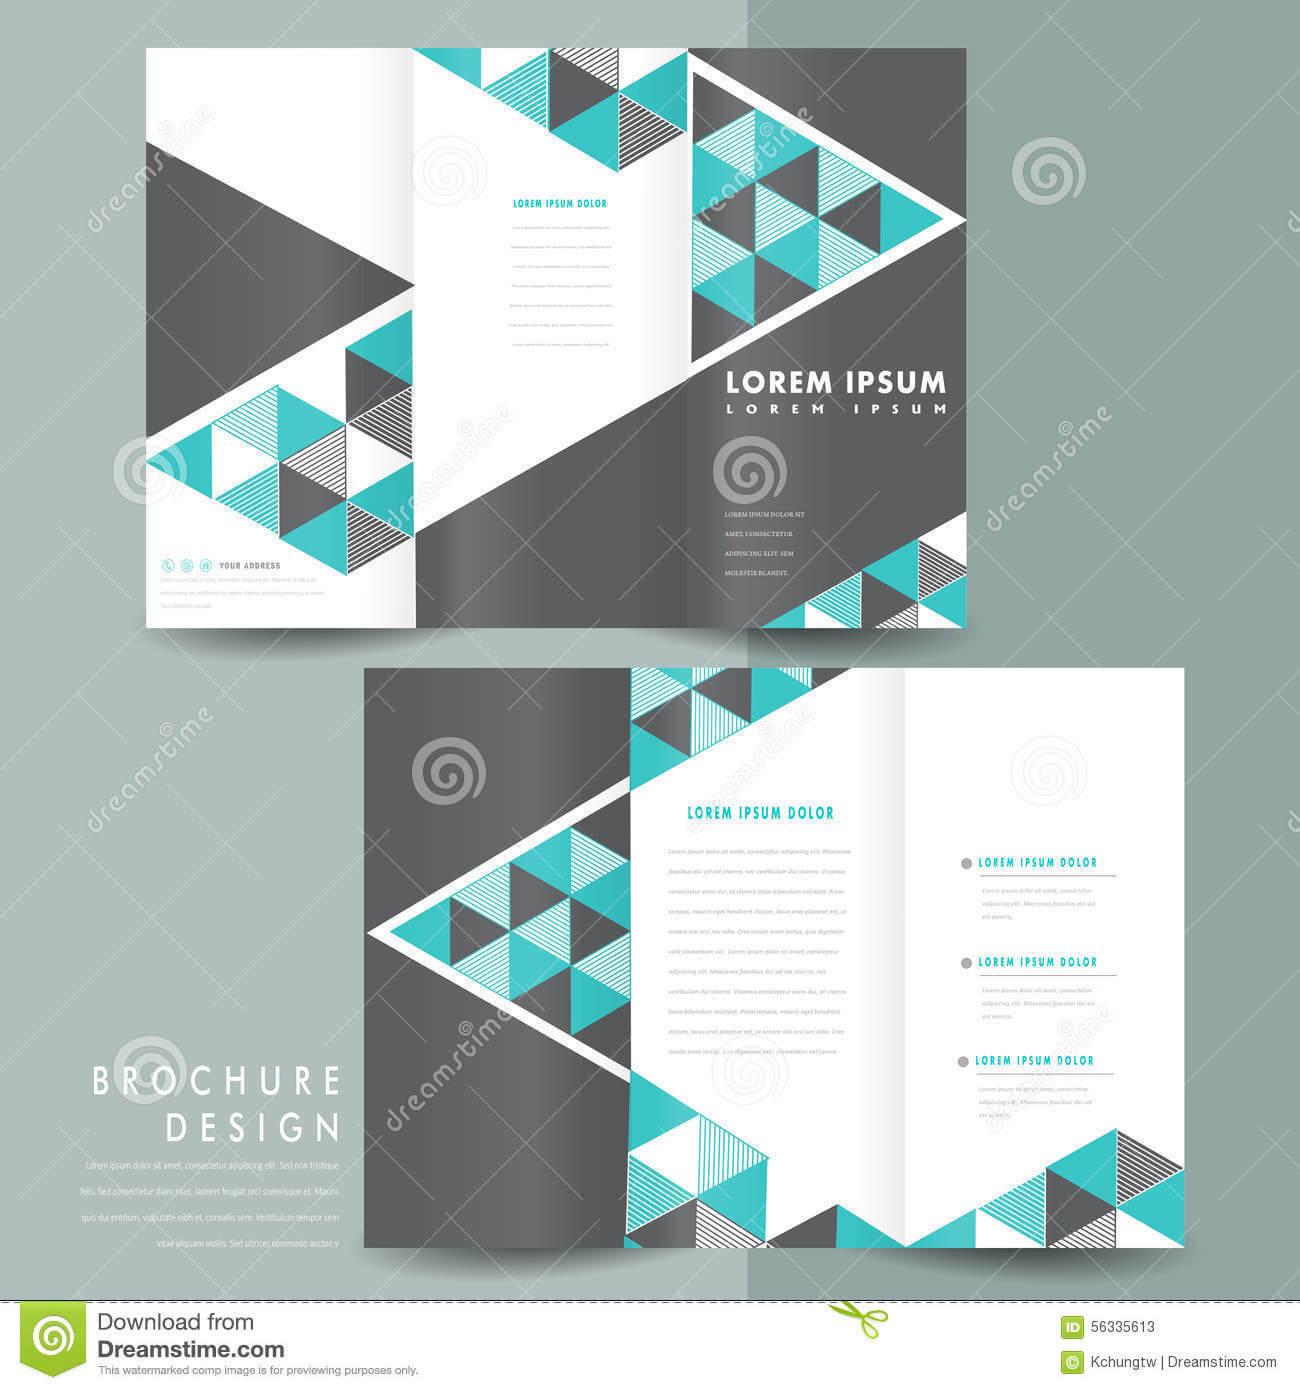 010 Template Ideas Tri Fold Brochure Free Modern Design Intended For Free Brochure Templates For Word 2010